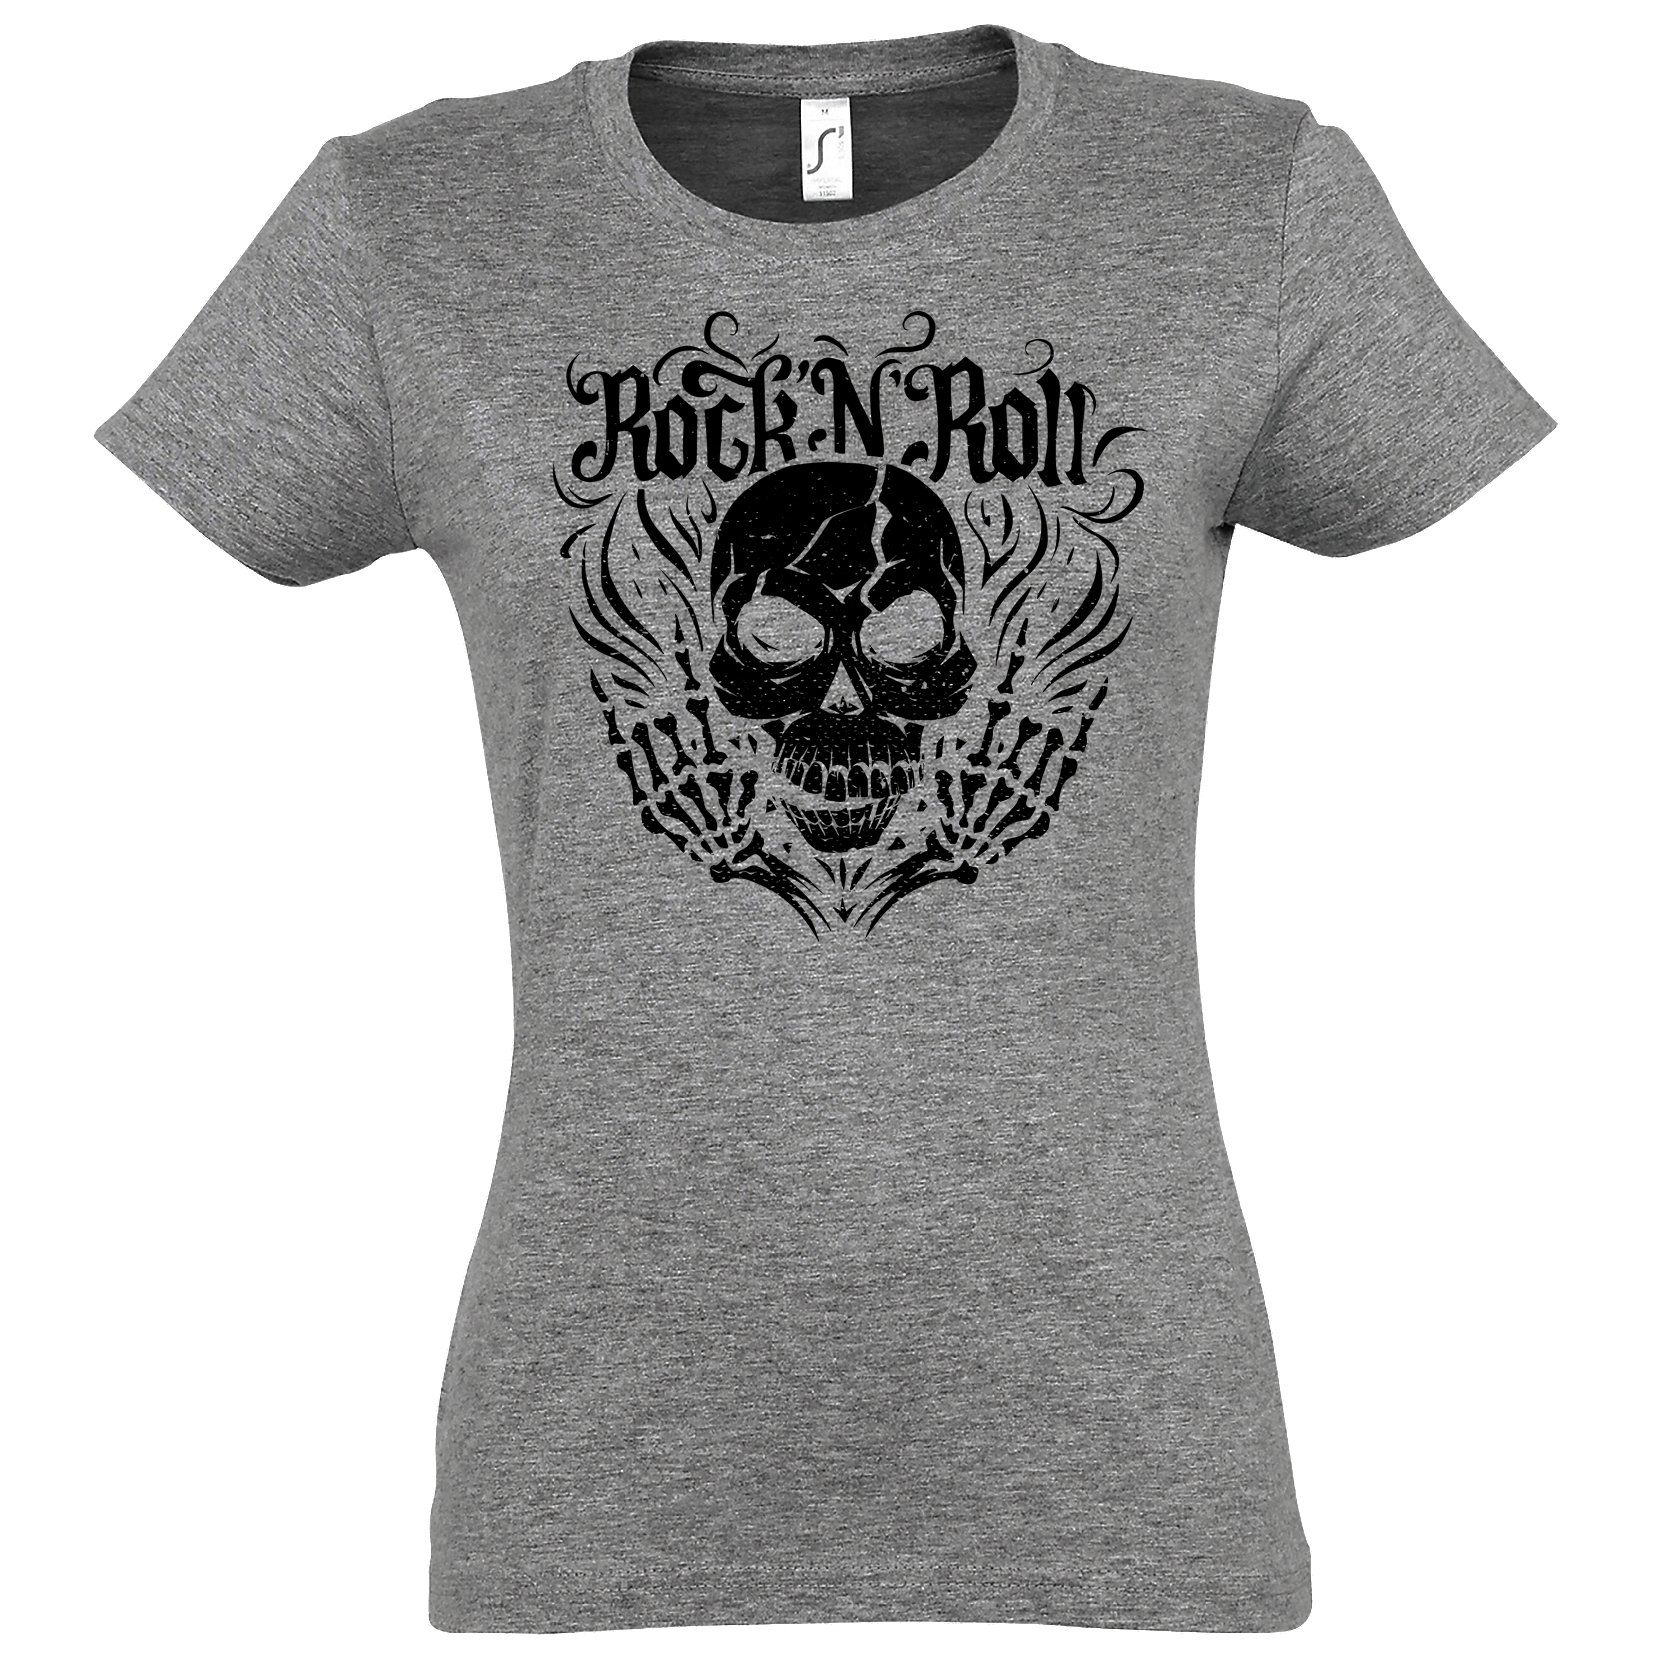 Youth Designz T-Shirt Skull Rock and Roll Damen Shirt im Fun-Look Mit modischem Print Grau